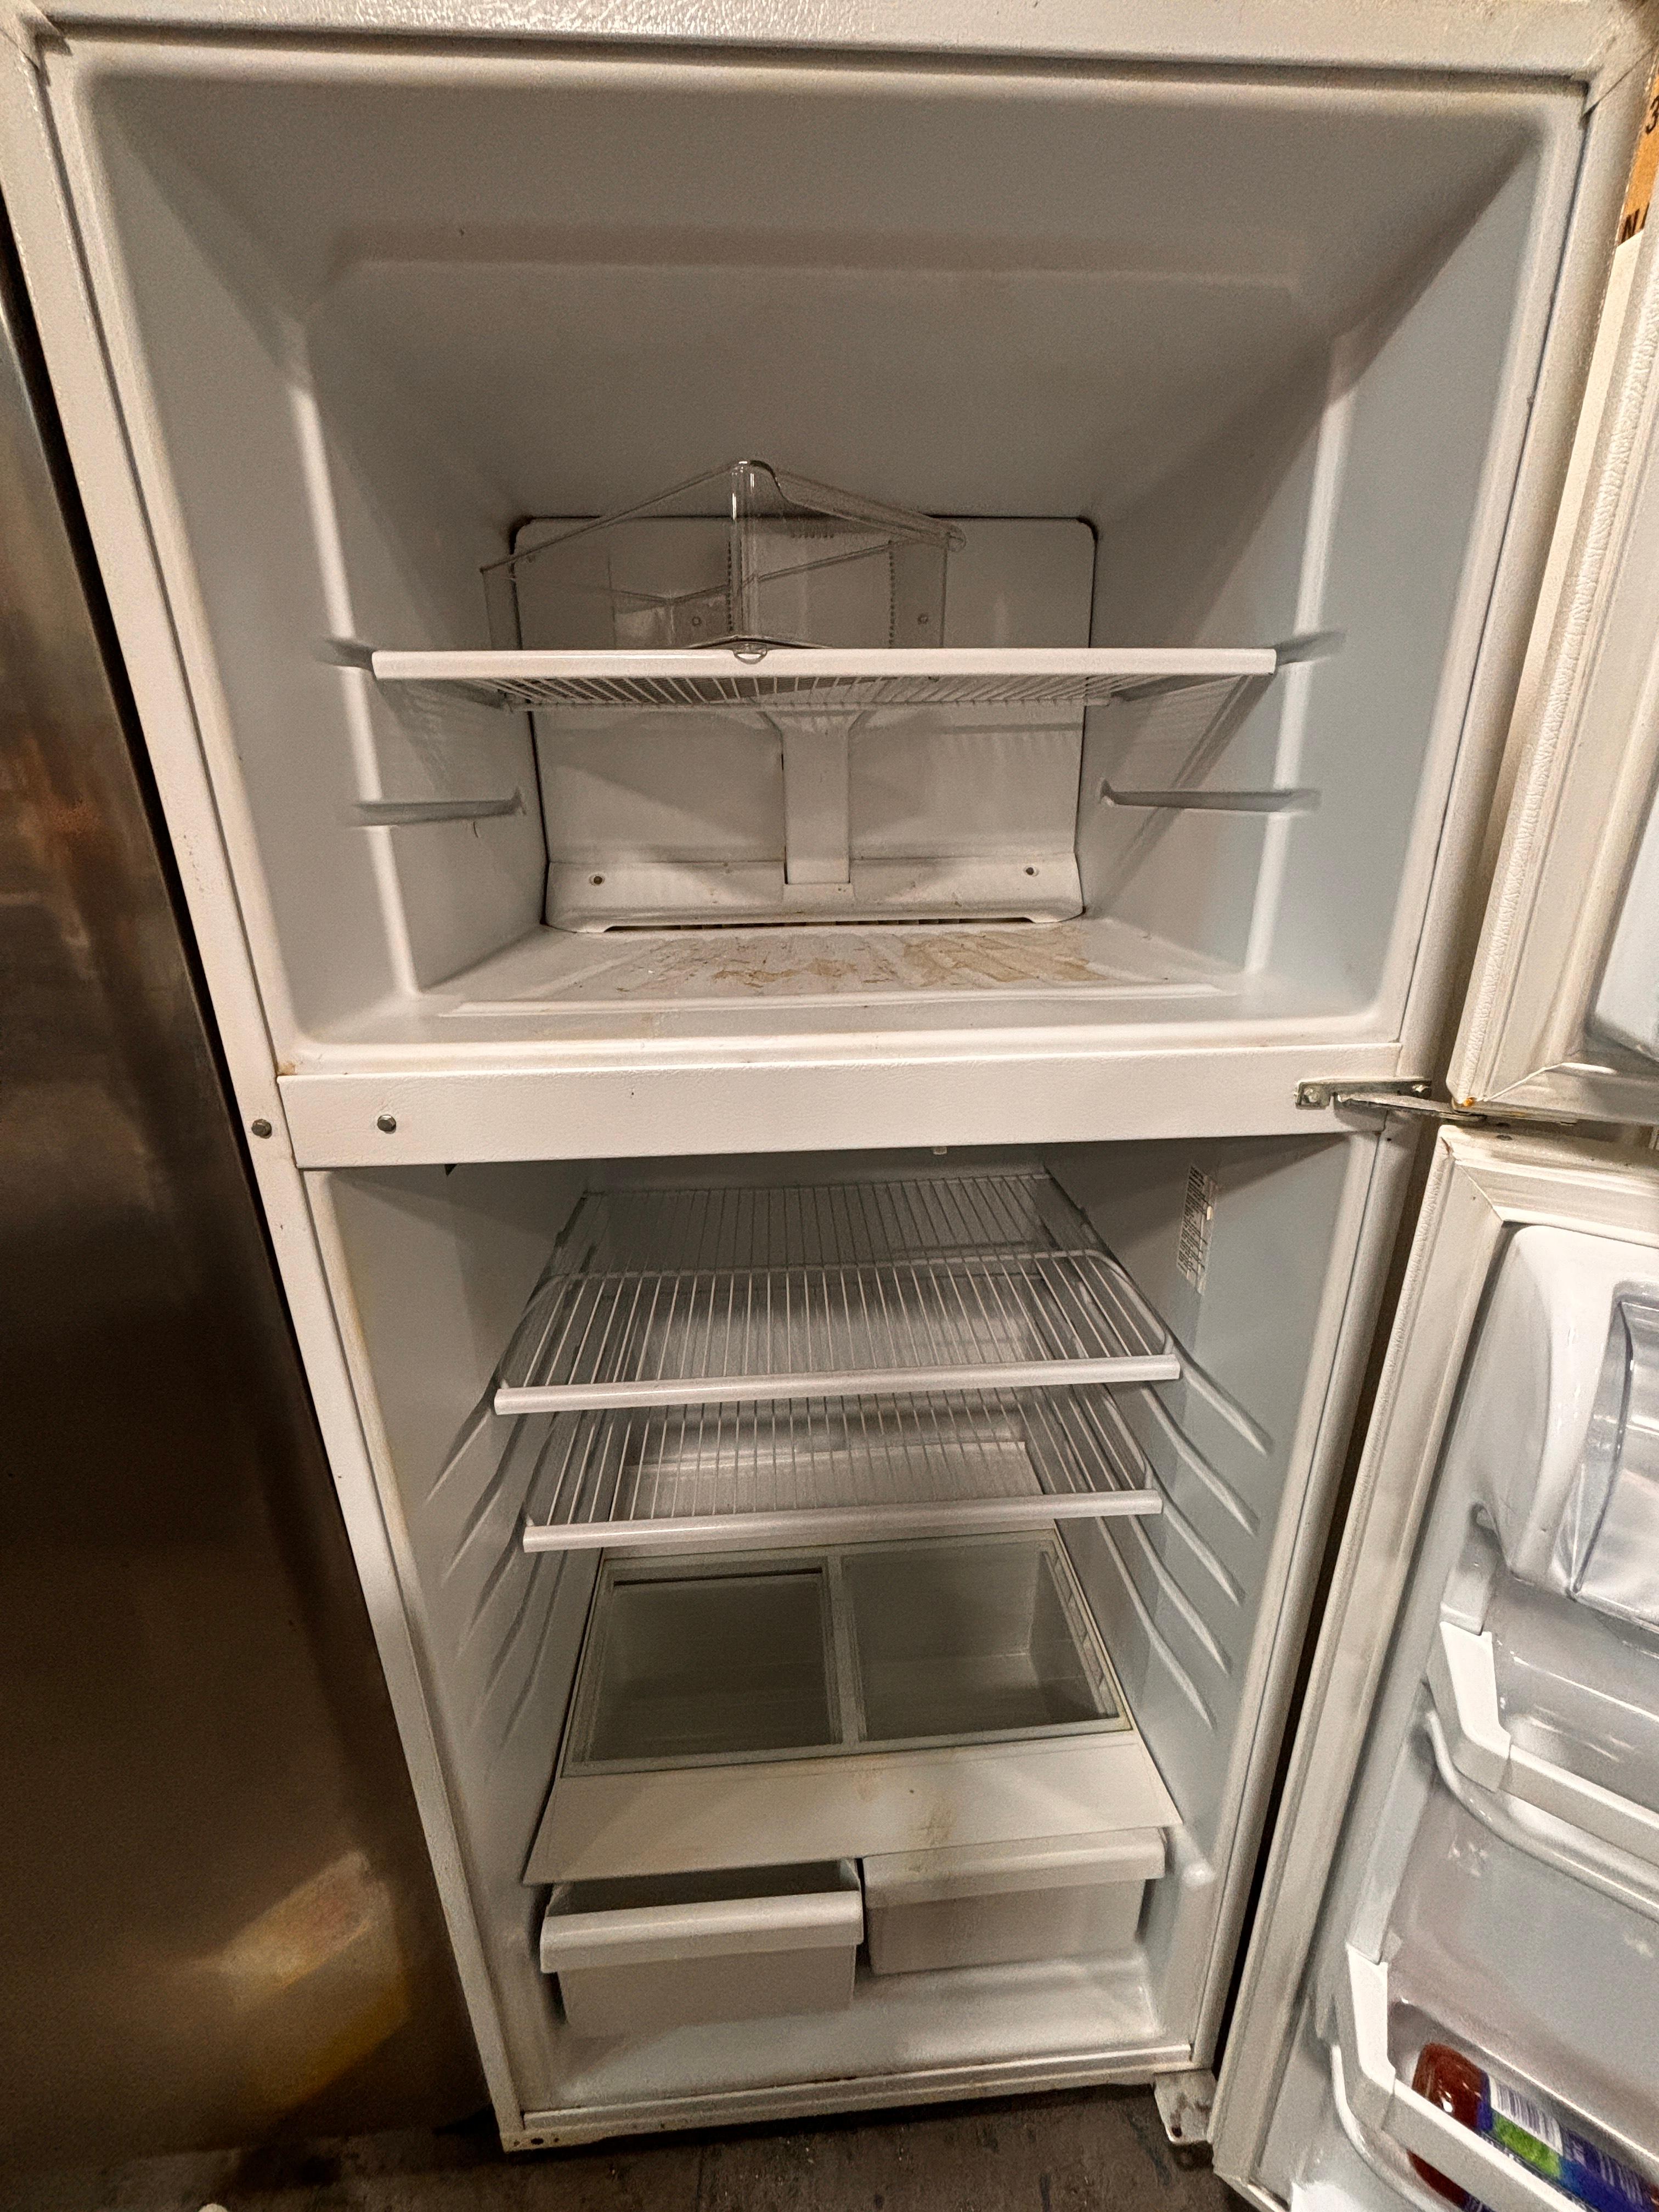 WHIRLPOOL Model #FFSS2614QS1A Residential Refrigerator / Freezer